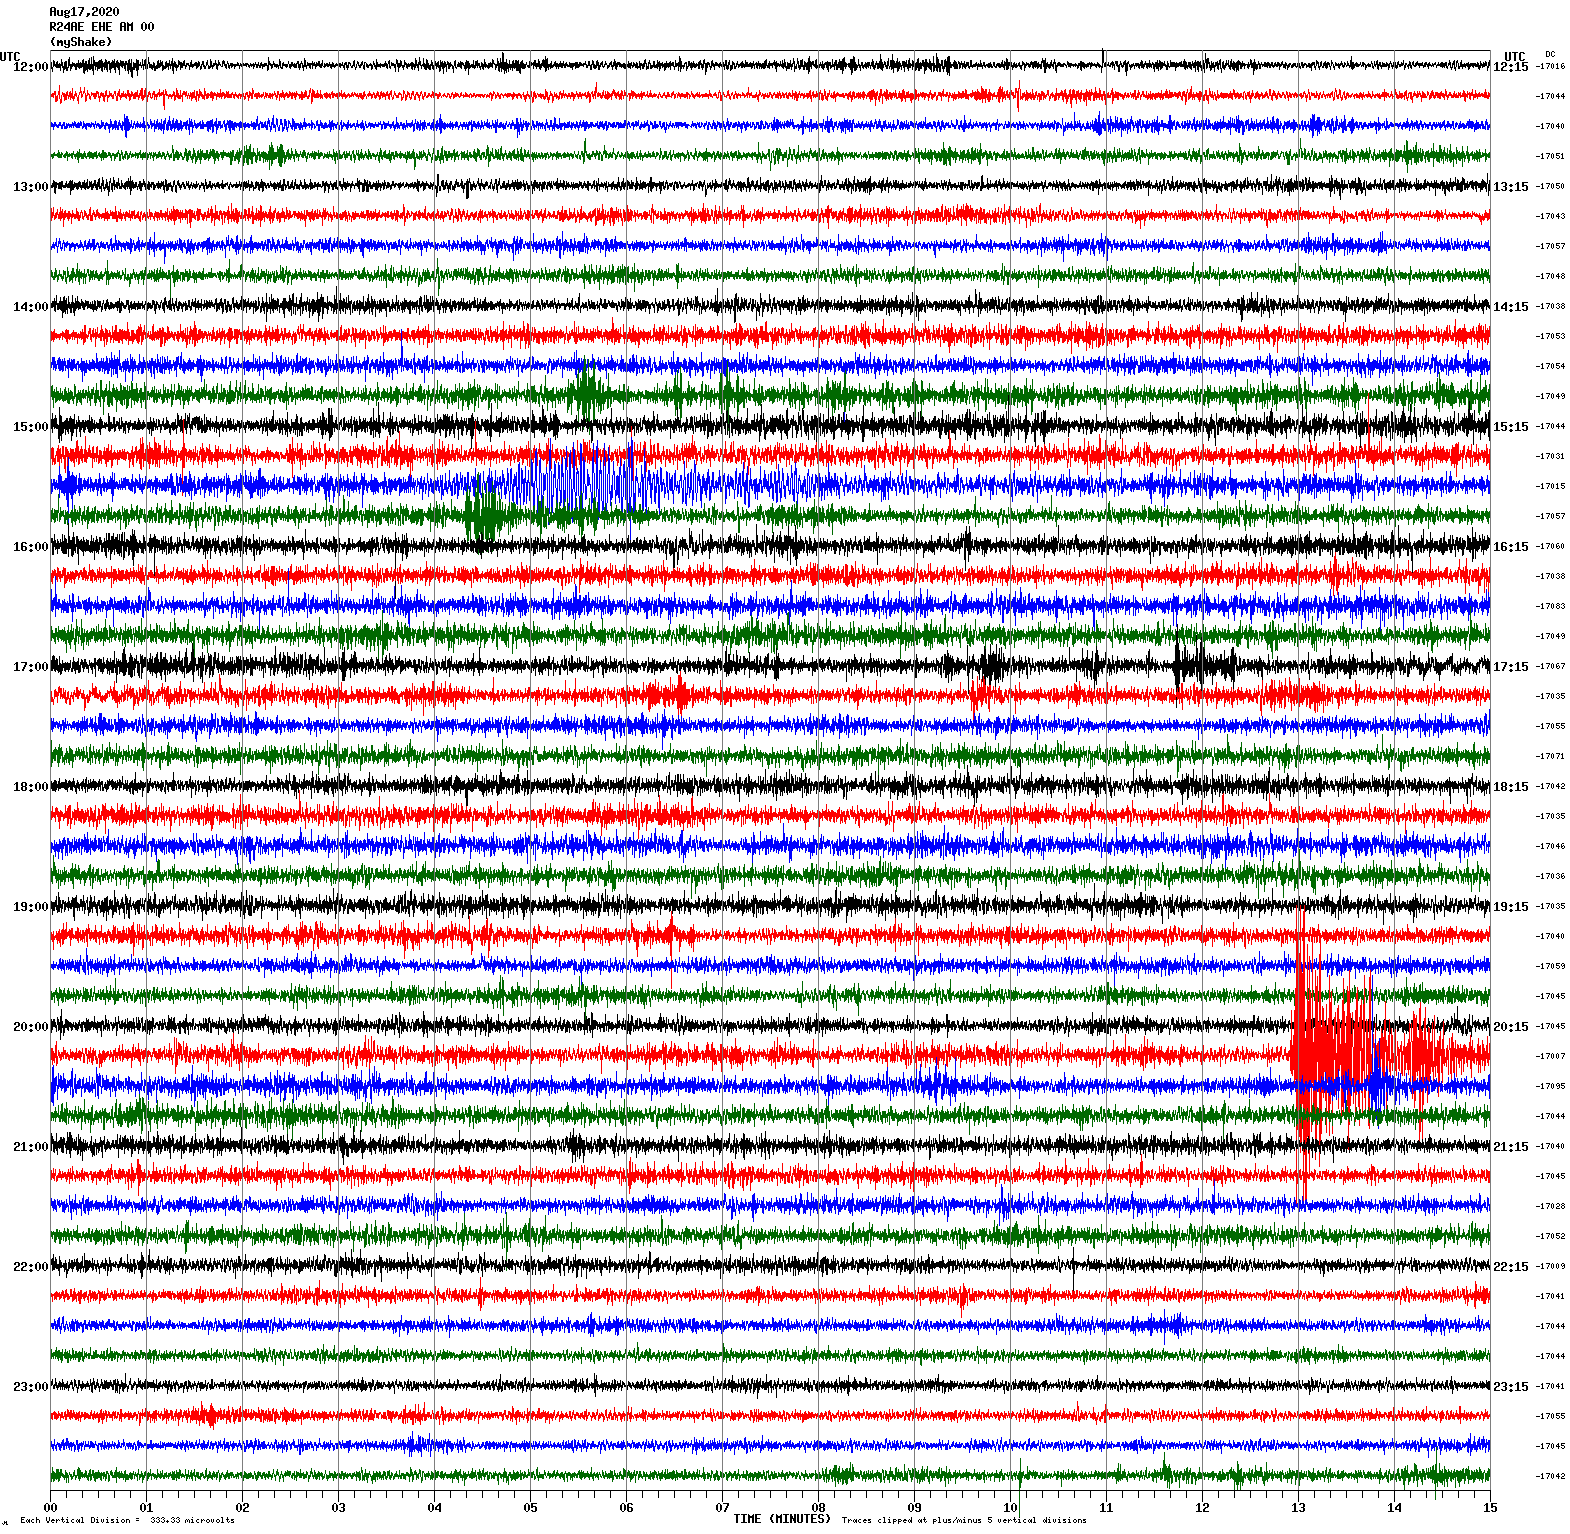 /seismic-data/R24AE/R24AE_EHE_AM_00.2020081712.gif